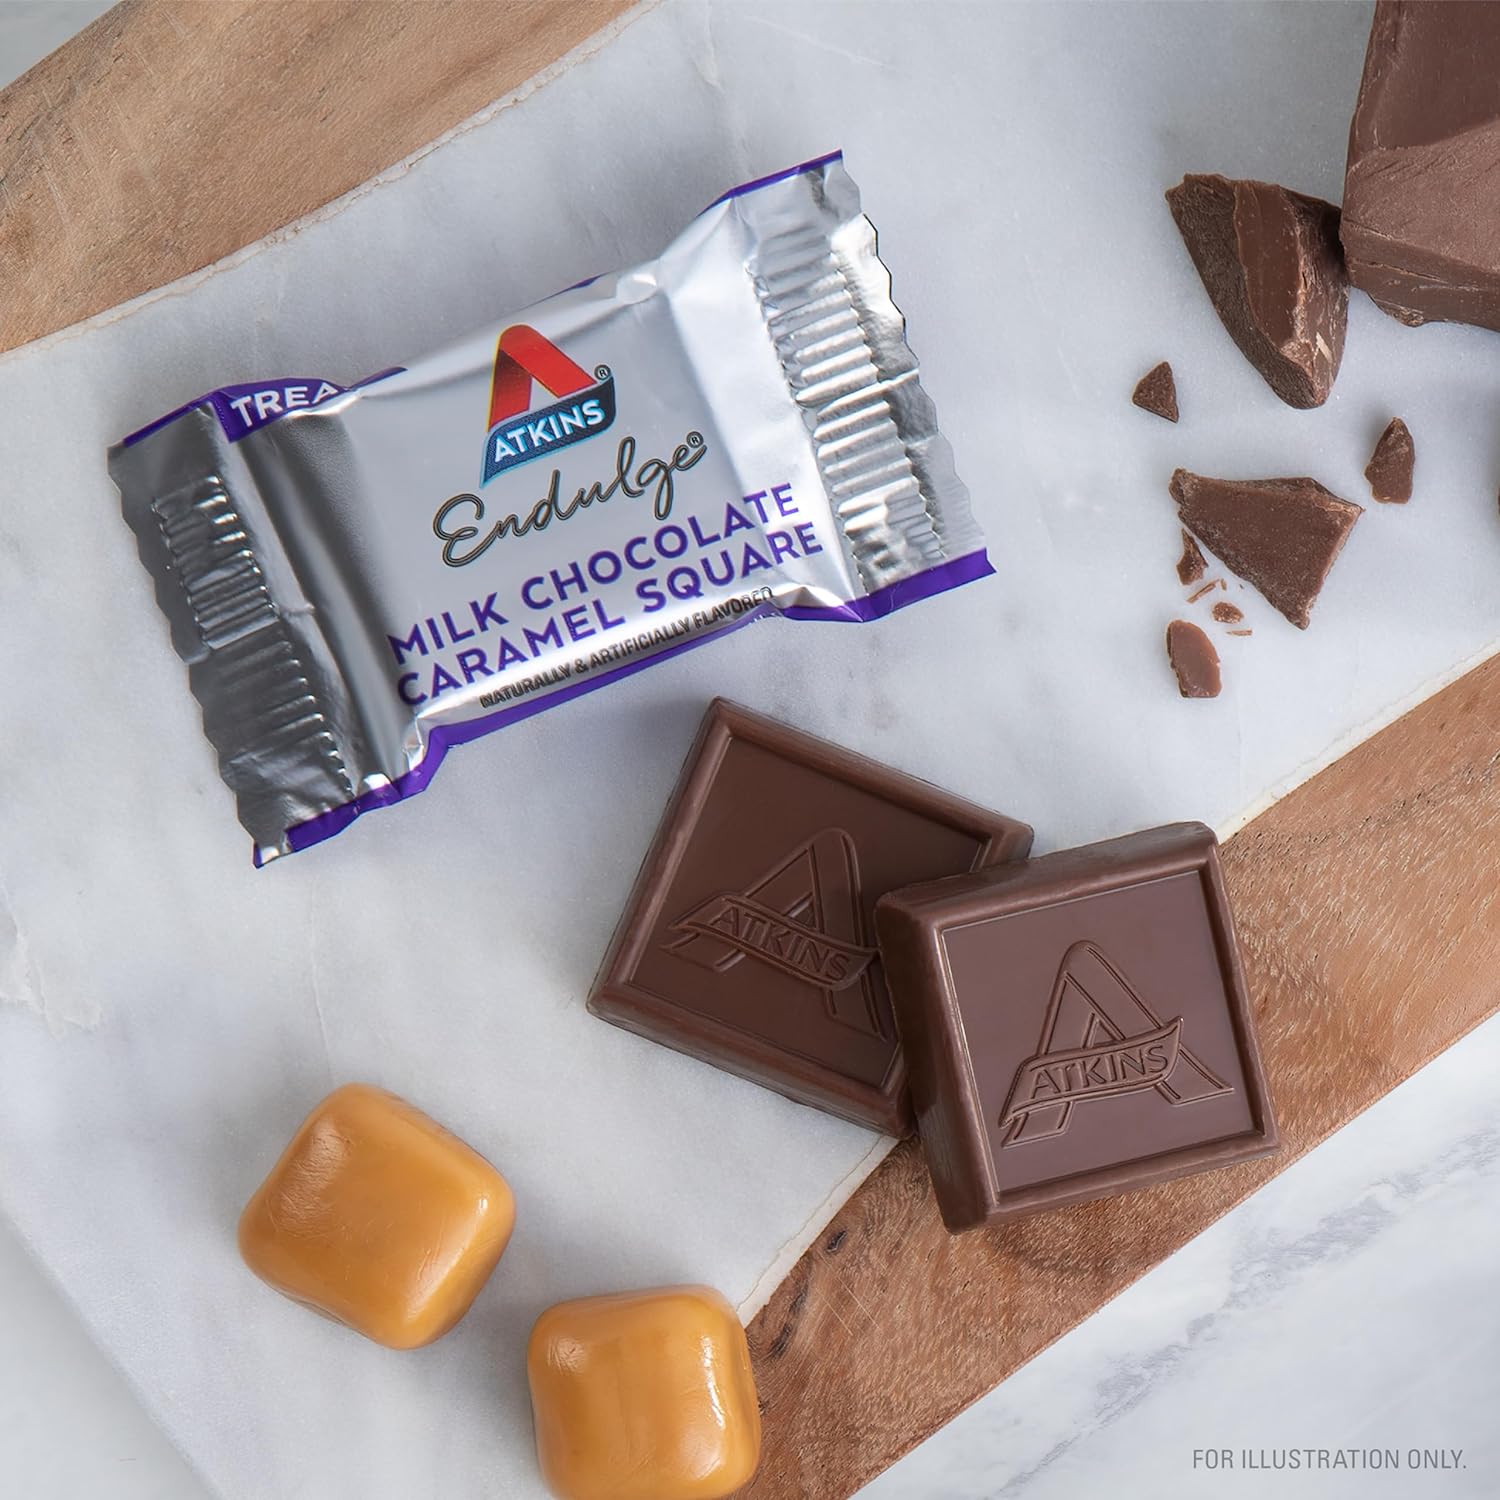 Atkins Endulge Milk Chocolate Caramel Squares, Dessert Favorite, Good Source of Fiber, 1g Sugar, 48 Count (16 Servings) : Health & Household